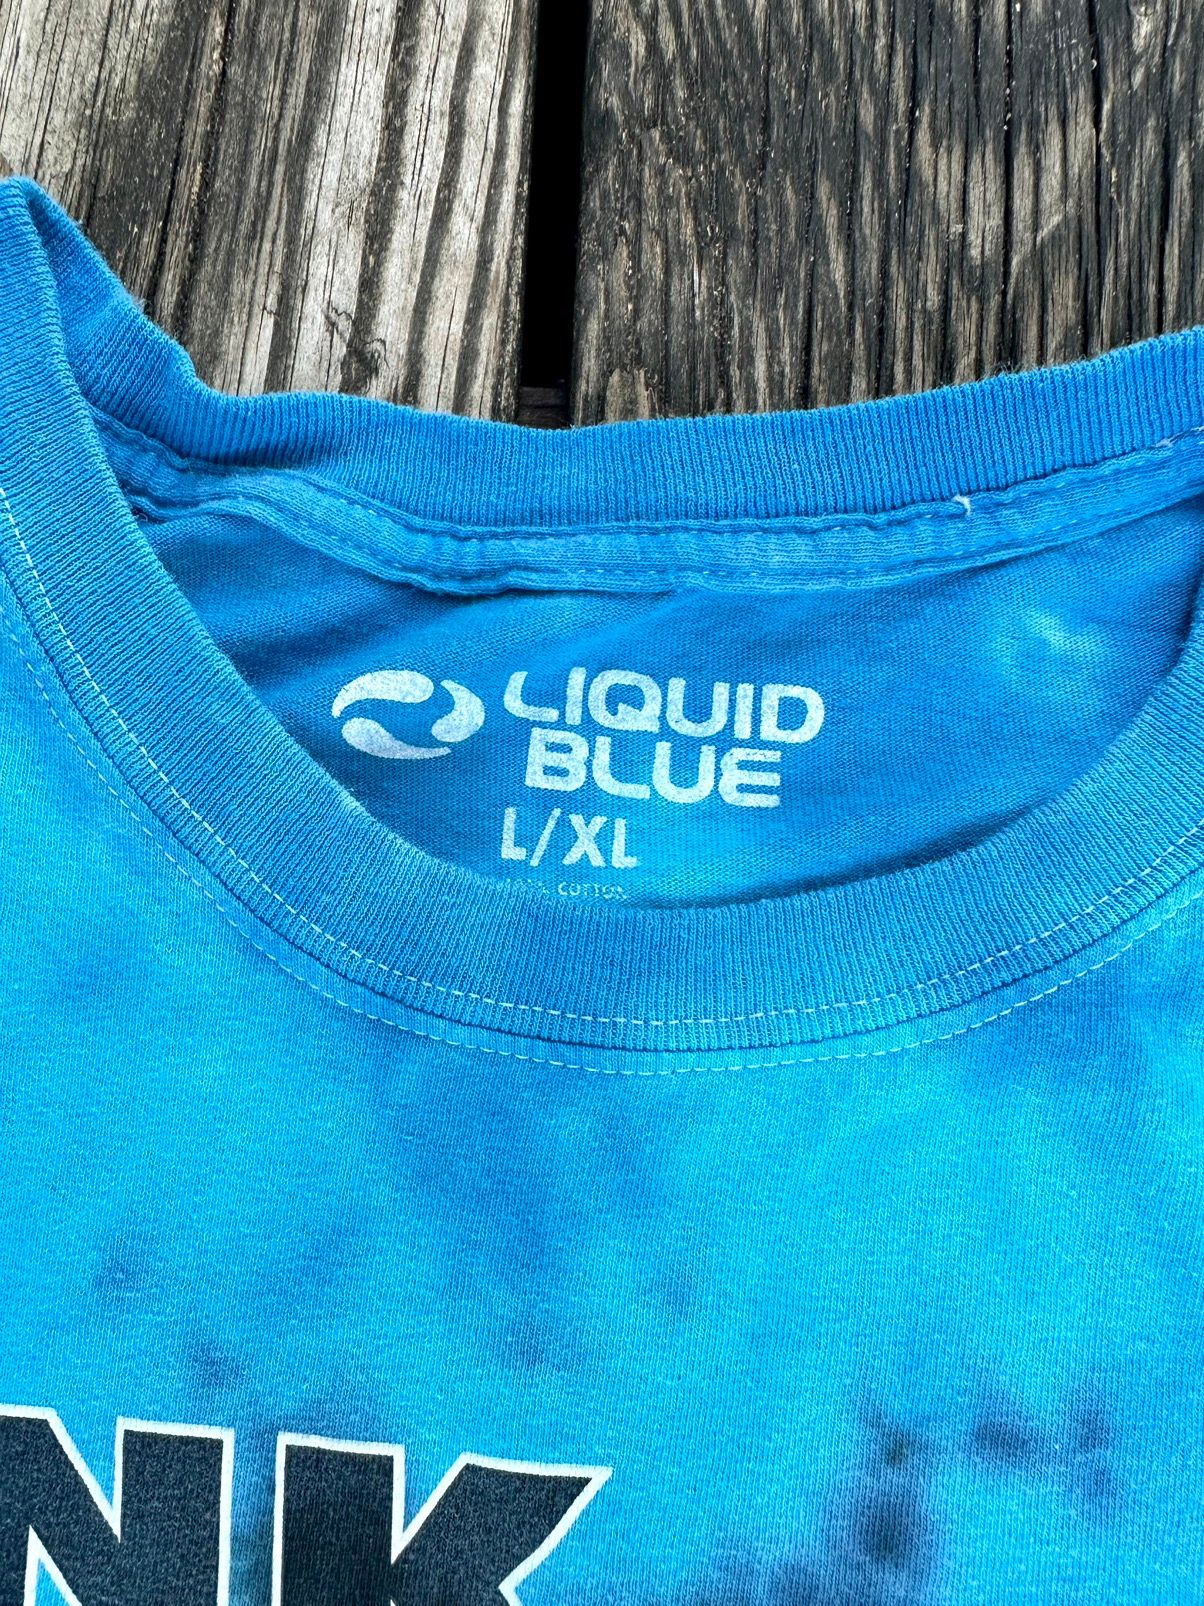 Liquid Blue Liquid Blue Pink Floyd Shirt Size US XL / EU 56 / 4 - 3 Thumbnail